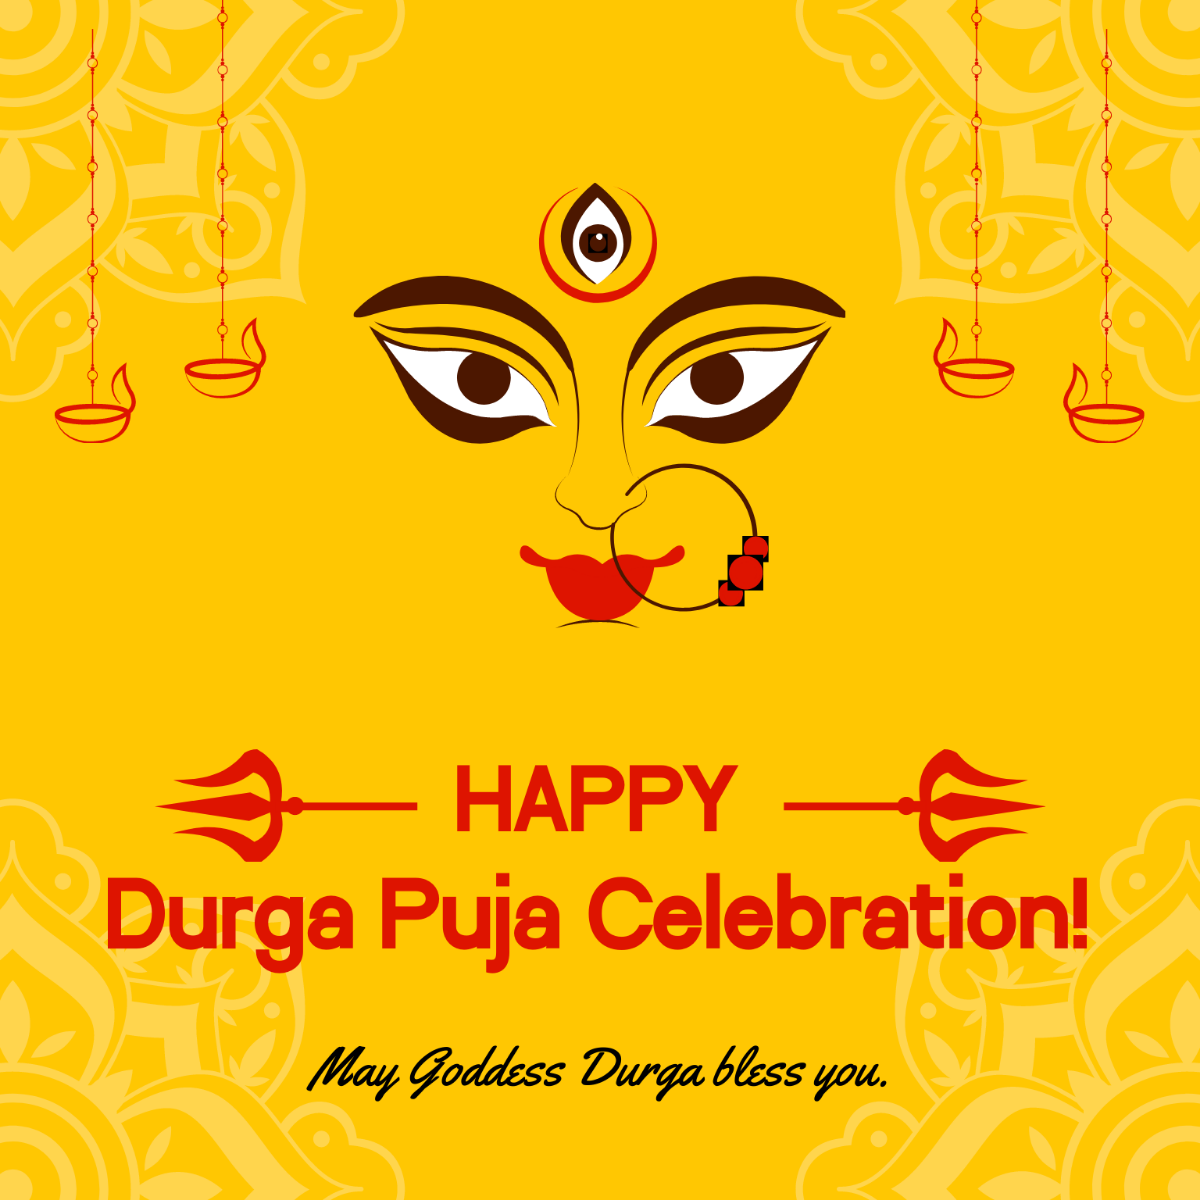 Durga Puja Celebration Greeting Card Template